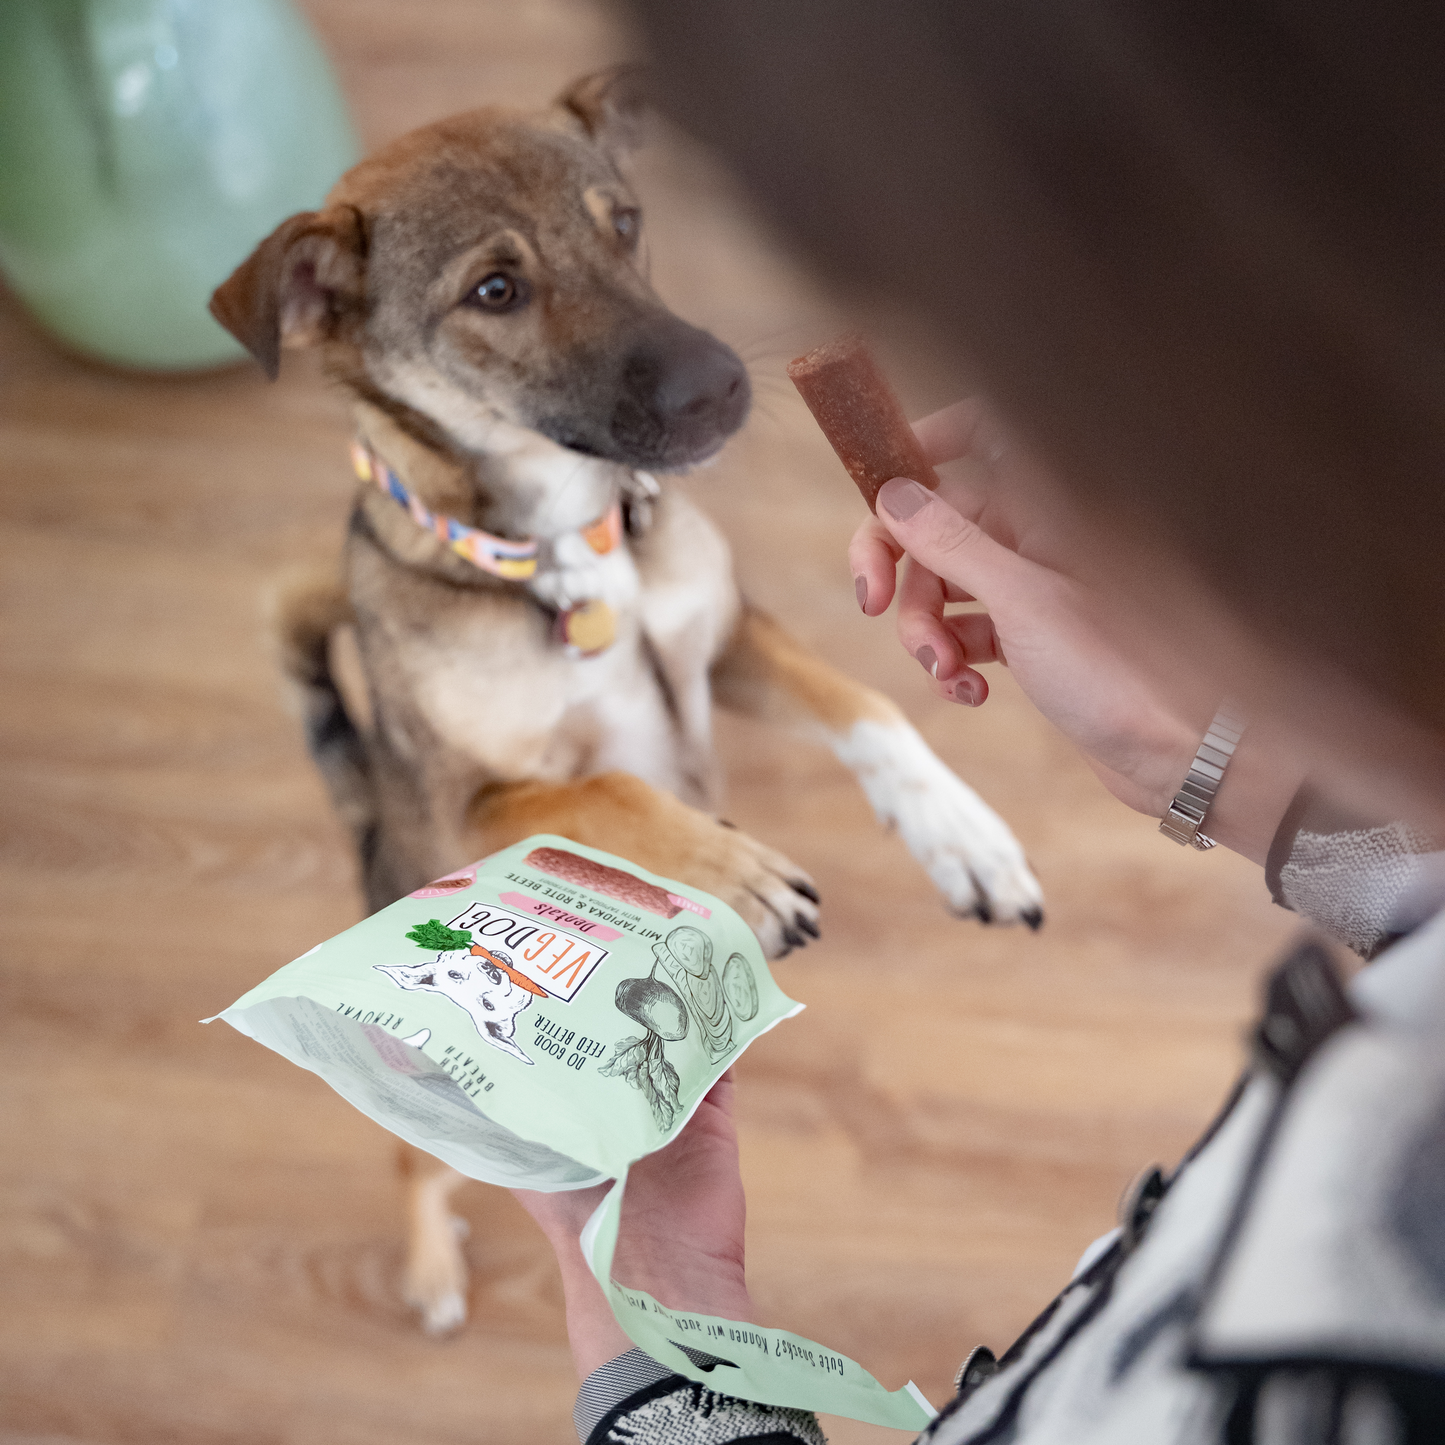 VEGDOG Hundekausnack "Dentals small" mit Tapioka & rote Beete - 120g | vegan